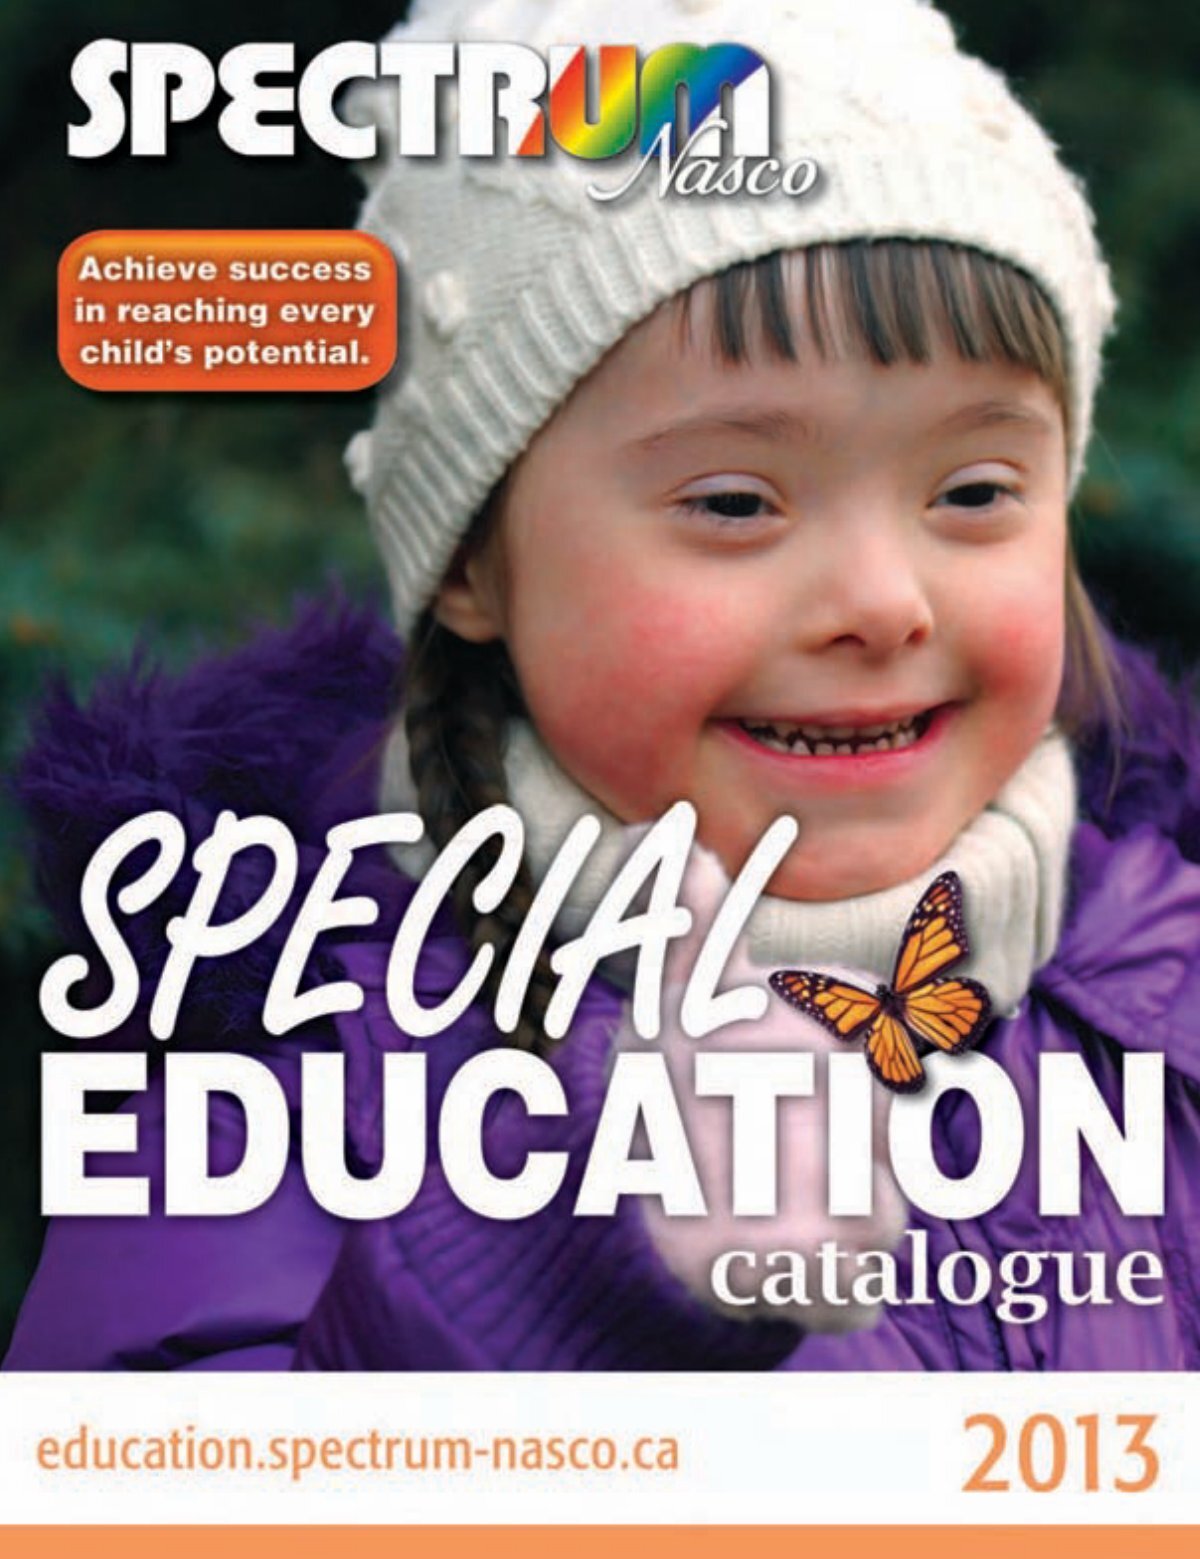 Special Education Catalogue - SPECTRUM Nasco Shopping Mall